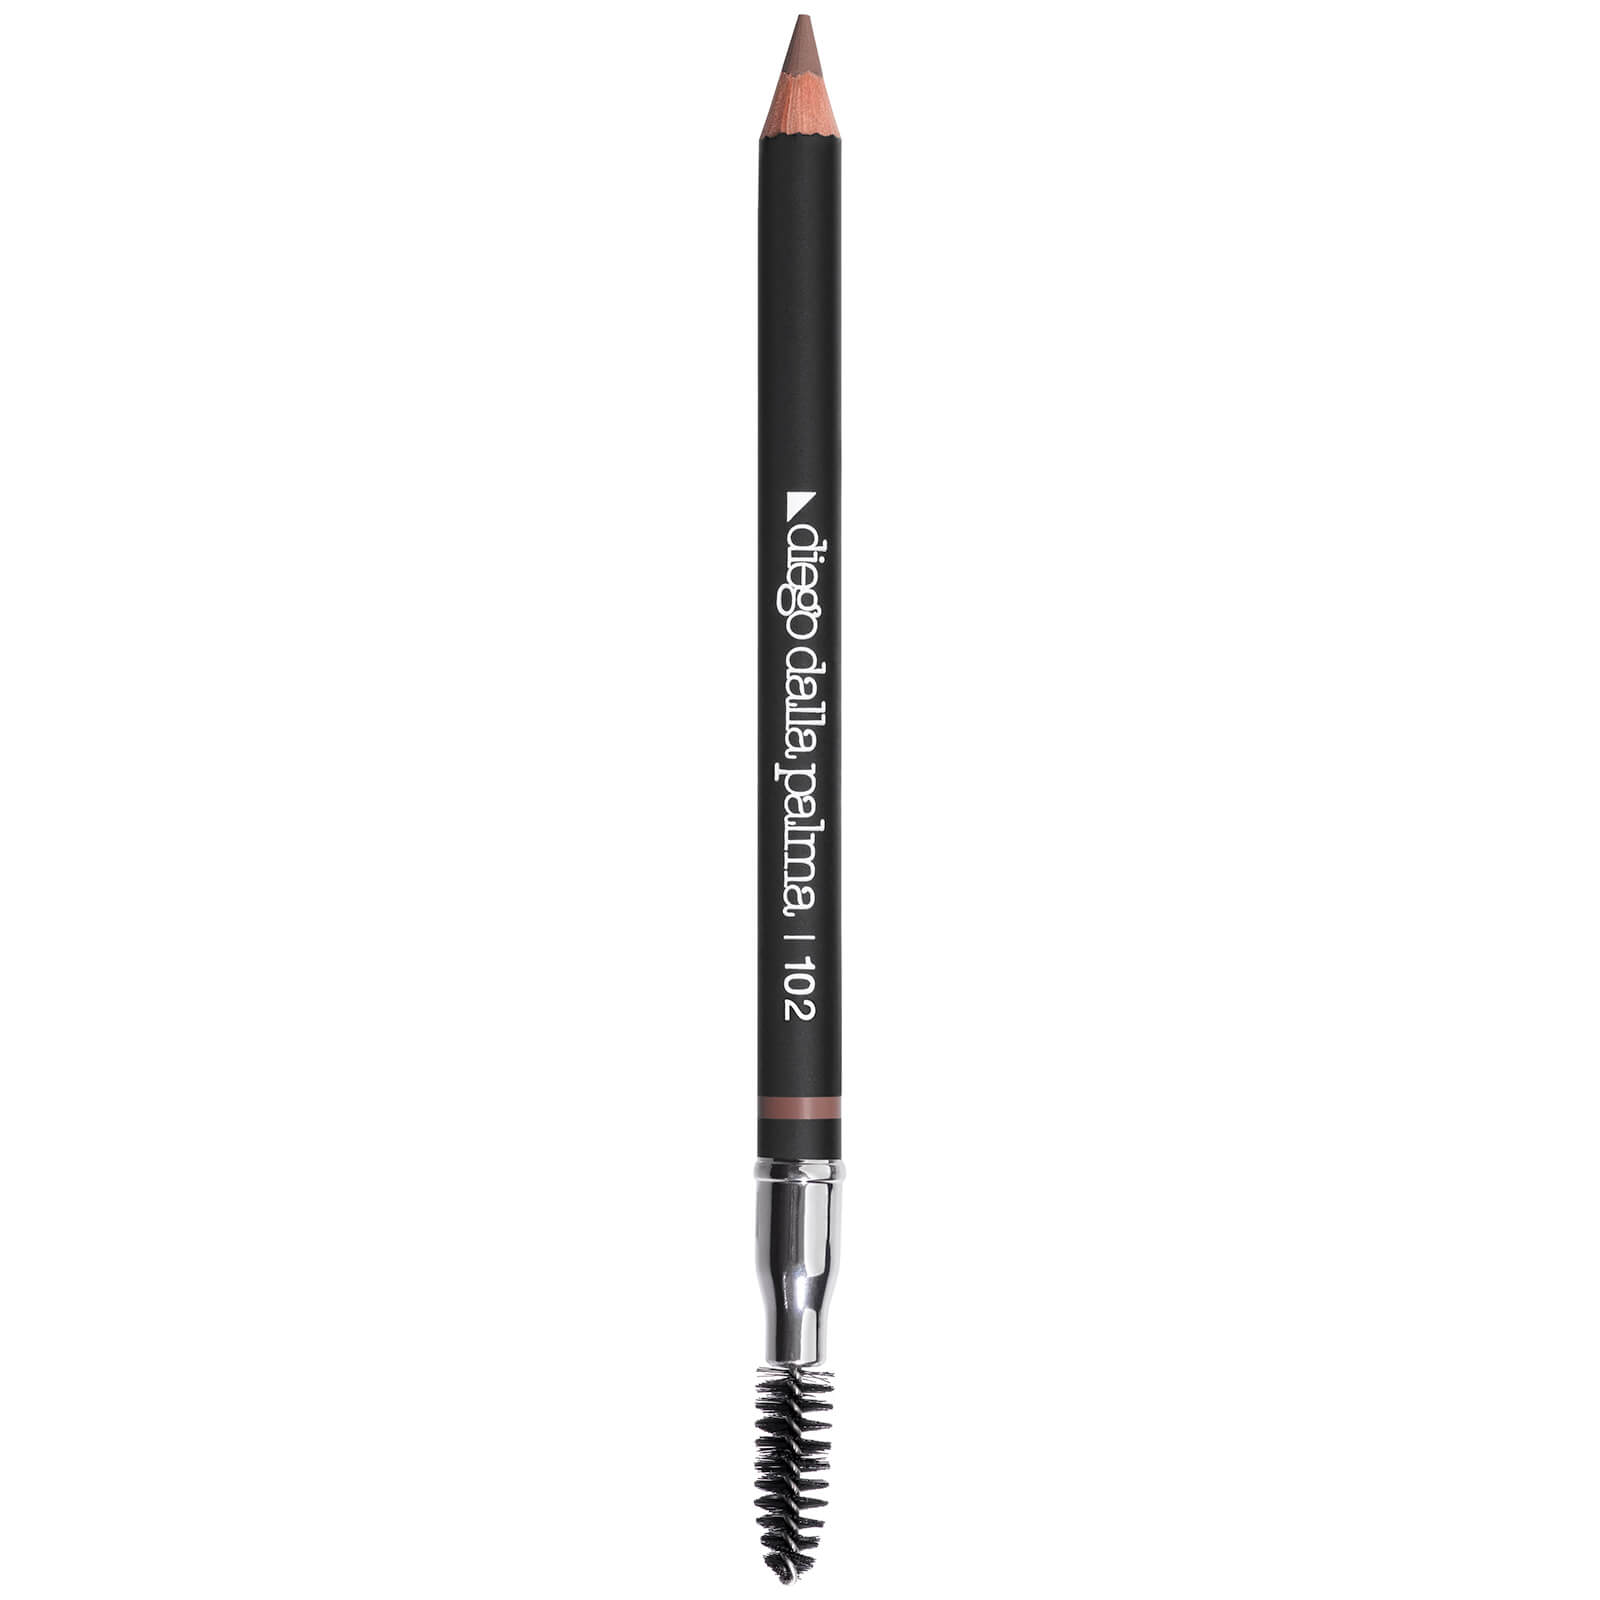 Diego Dalla Palma Eyebrow Pencil 2.5g (Various Shades) - Medium